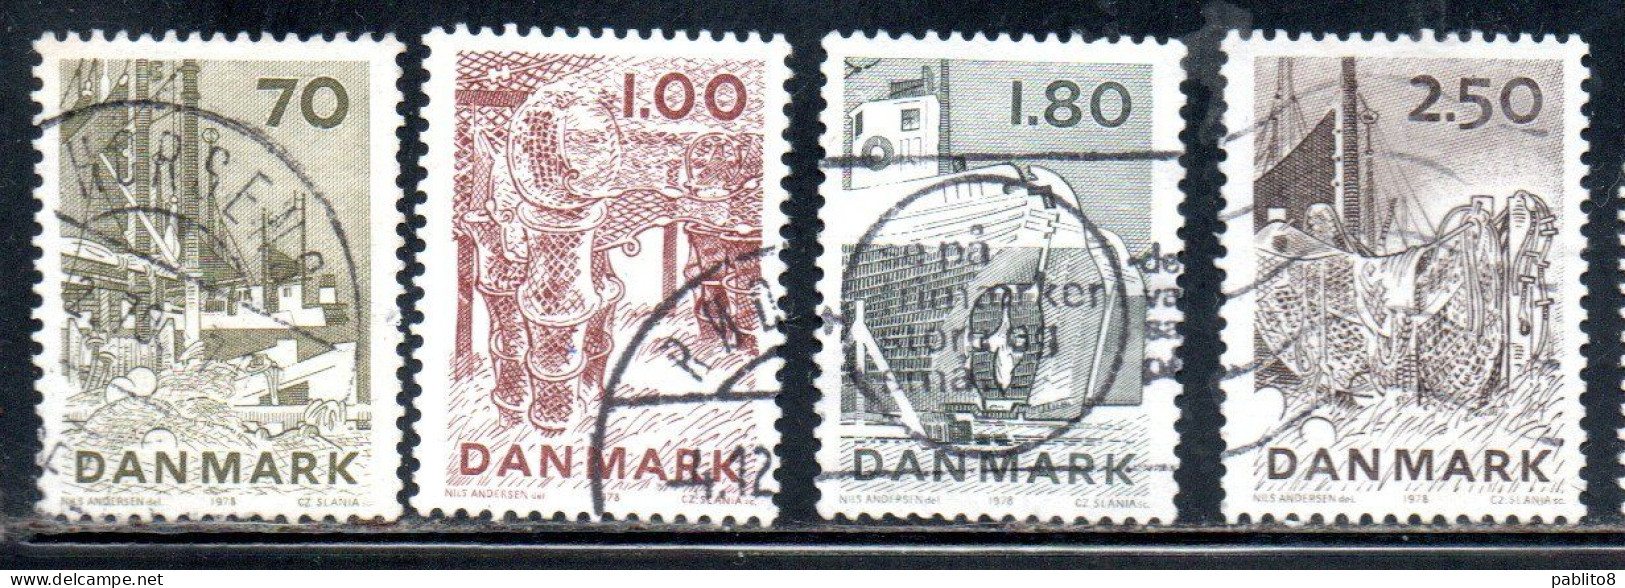 DANEMARK DANMARK DENMARK DANIMARCA 1978 DANISH FISHING INDUSTRY COMPLETE SET SERIE COMPLETA USED USATO OBLITERE' - Used Stamps